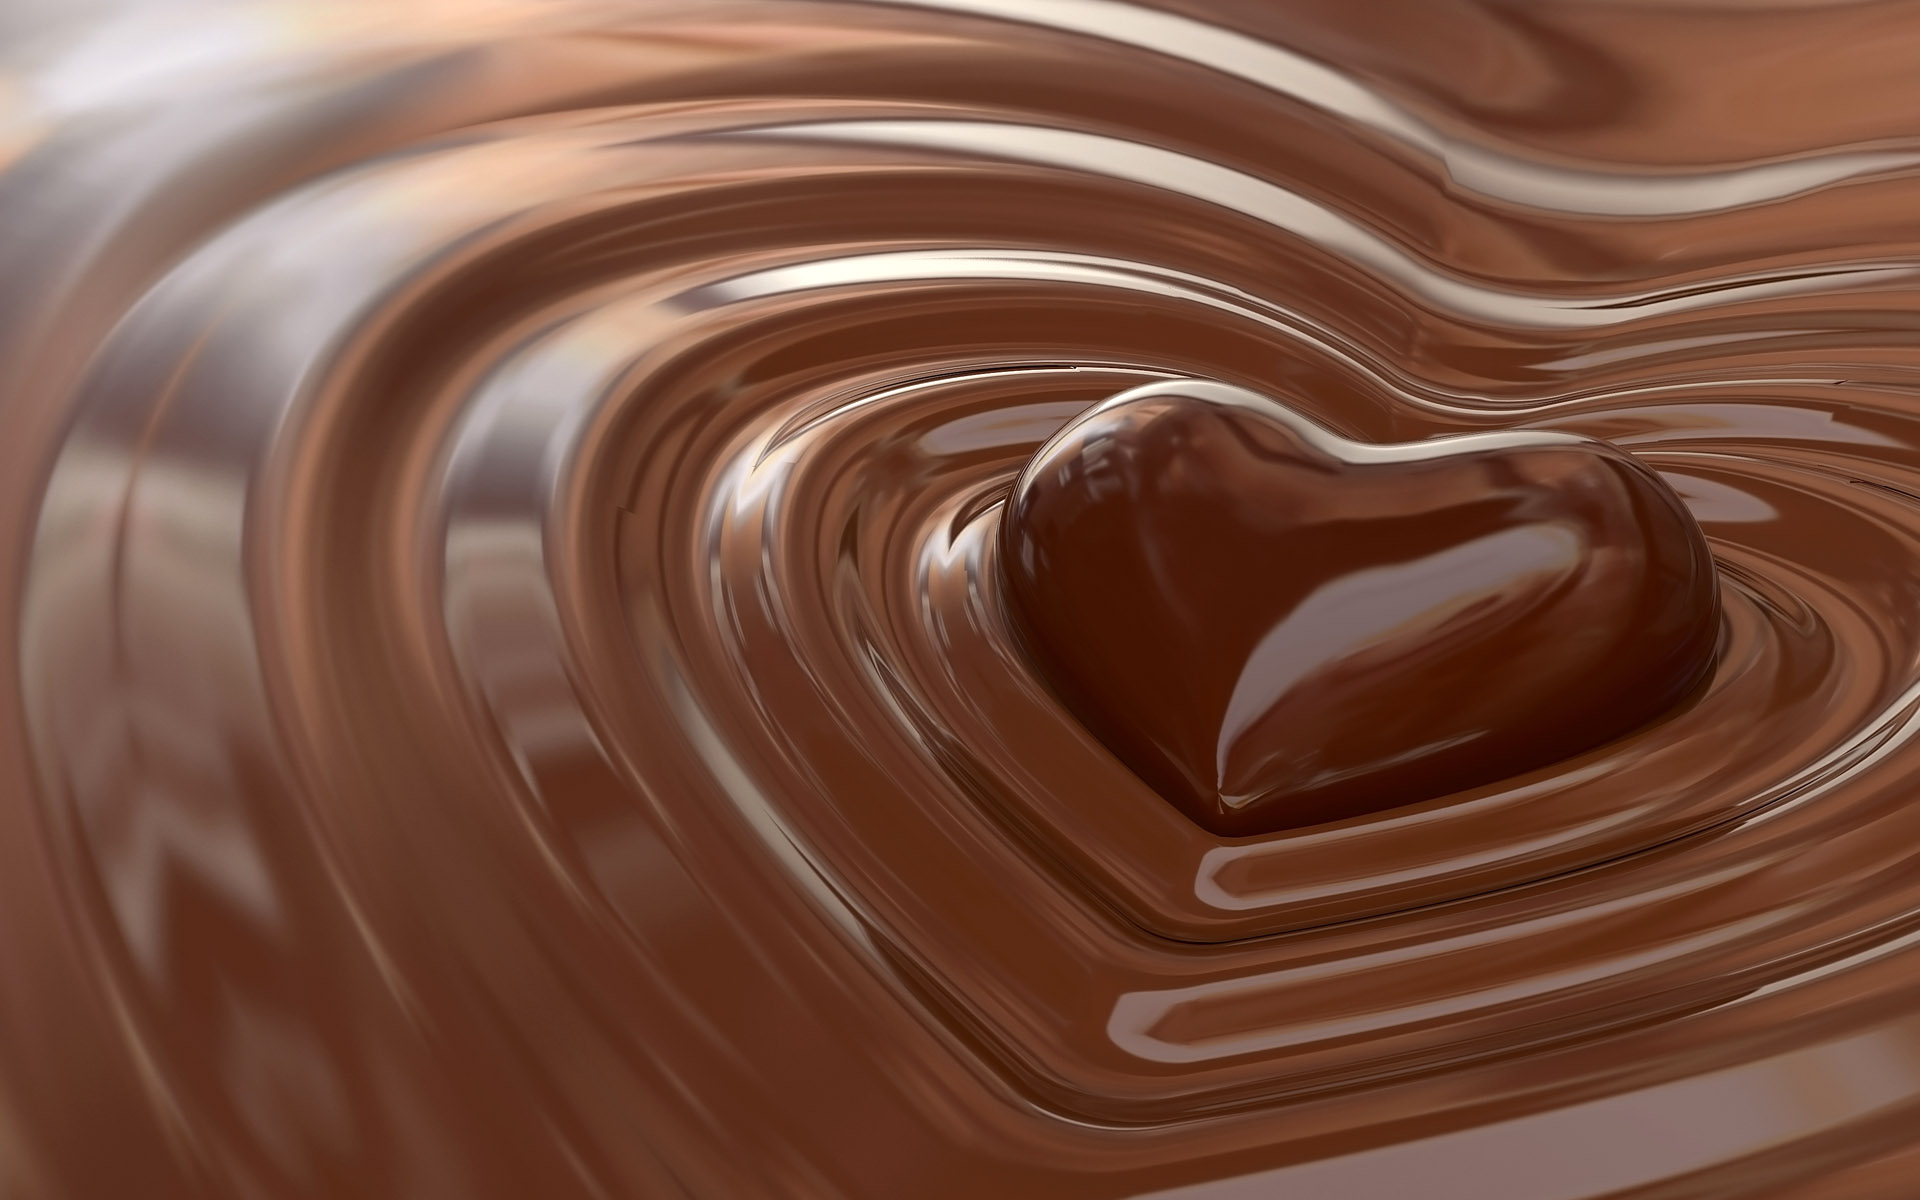 chocolate-day-2014-quotes-for-girlfriend-boyfriend-1393853525